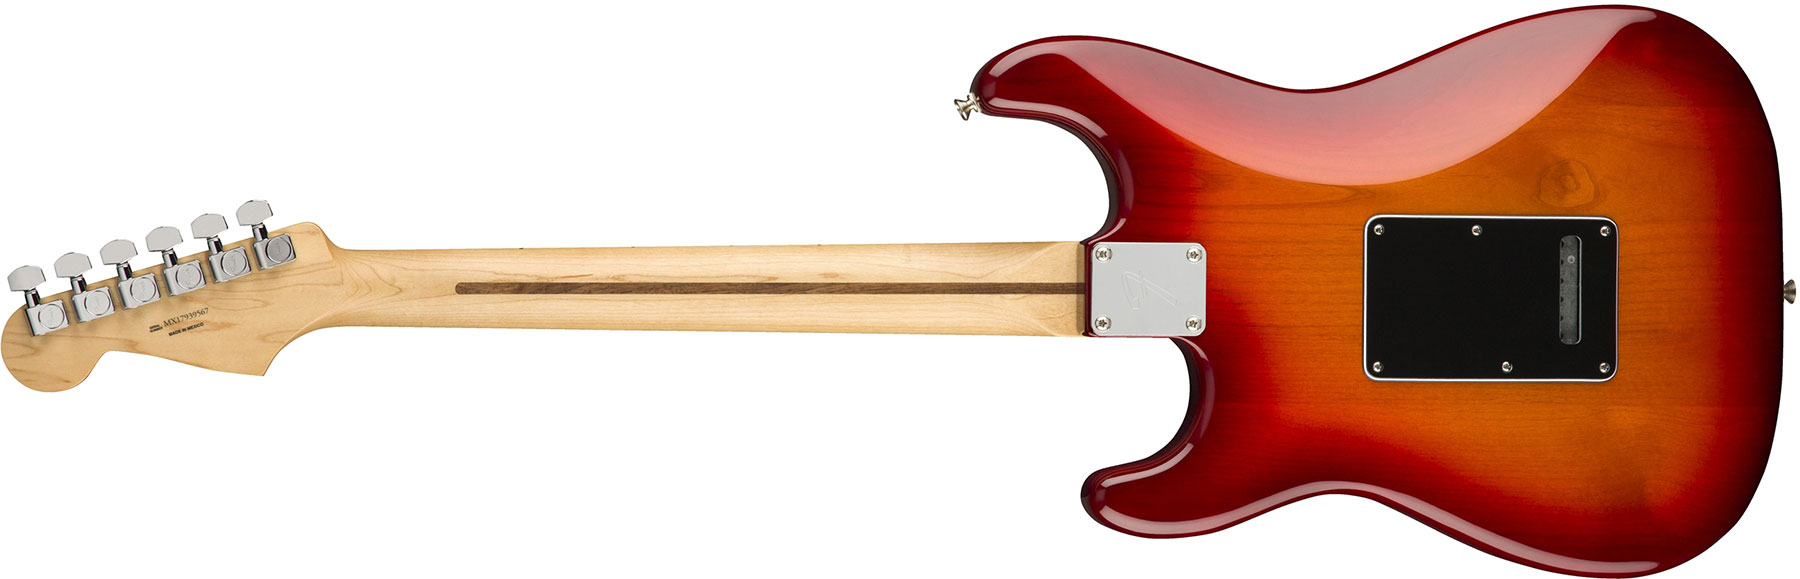 Fender Strat Player Plus Top Mex Hss Mn - Aged Cherry Burst - Guitarra eléctrica con forma de str. - Variation 1